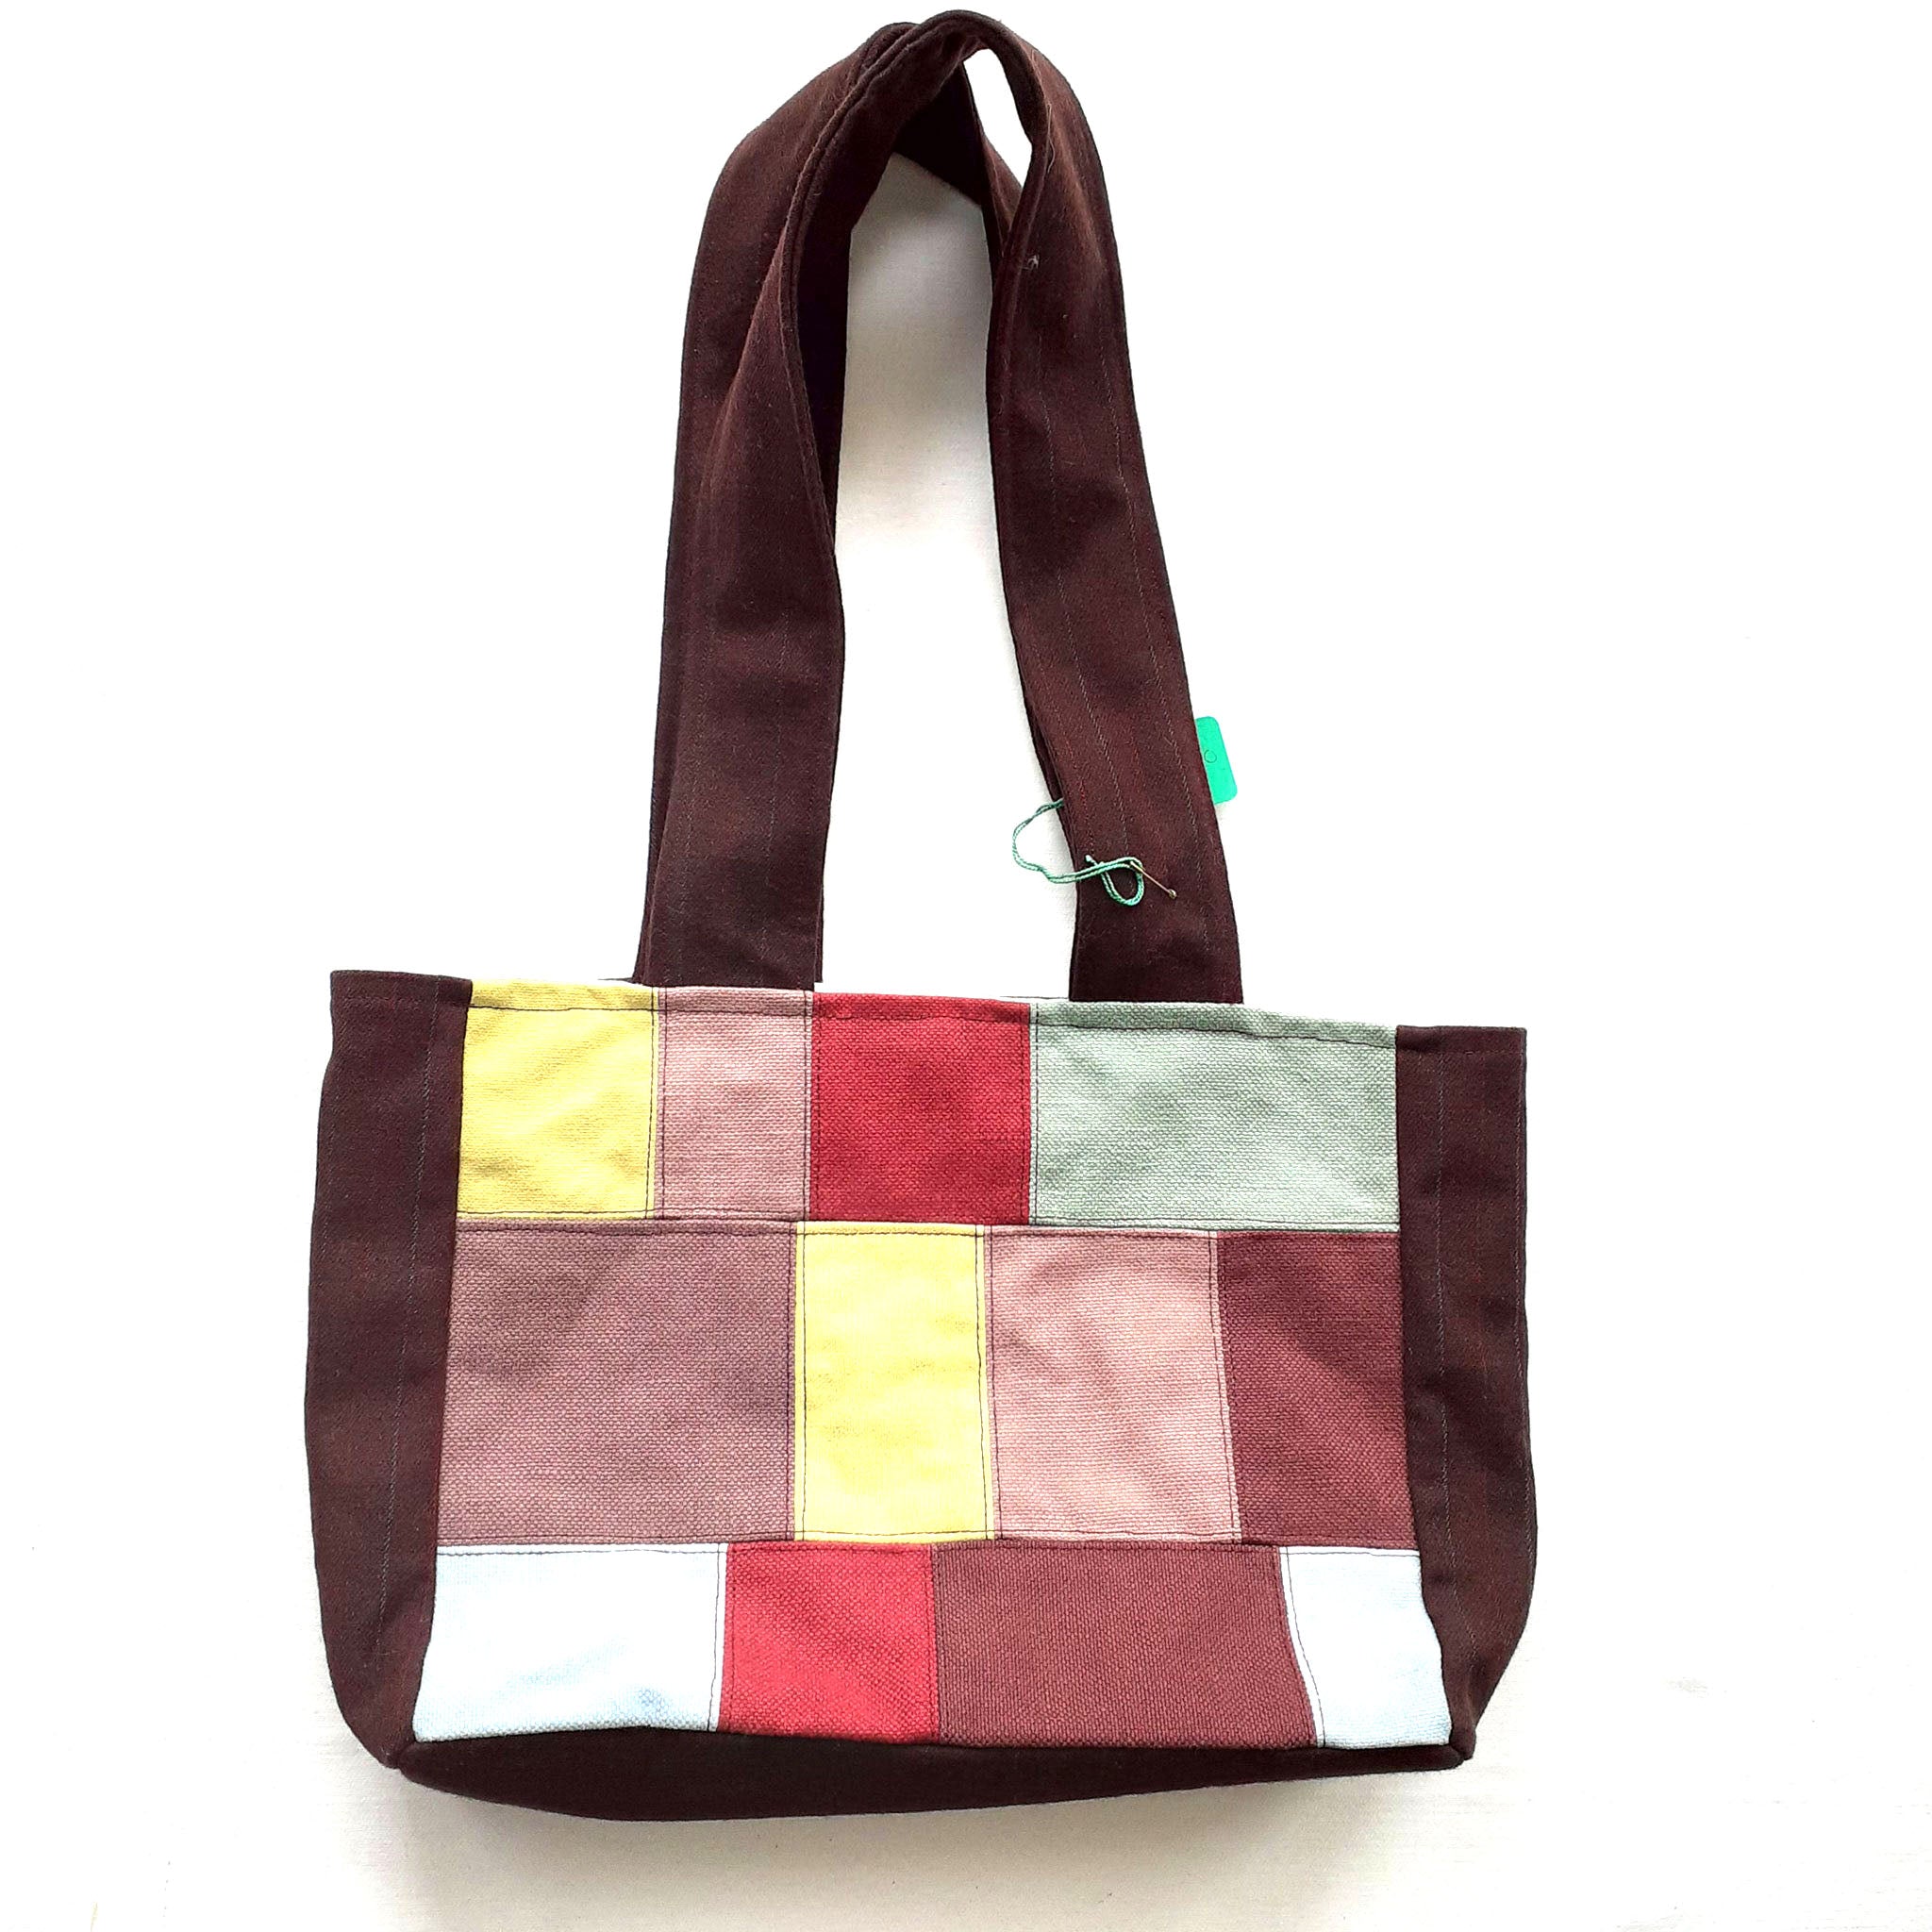 Handmade patchwork bag